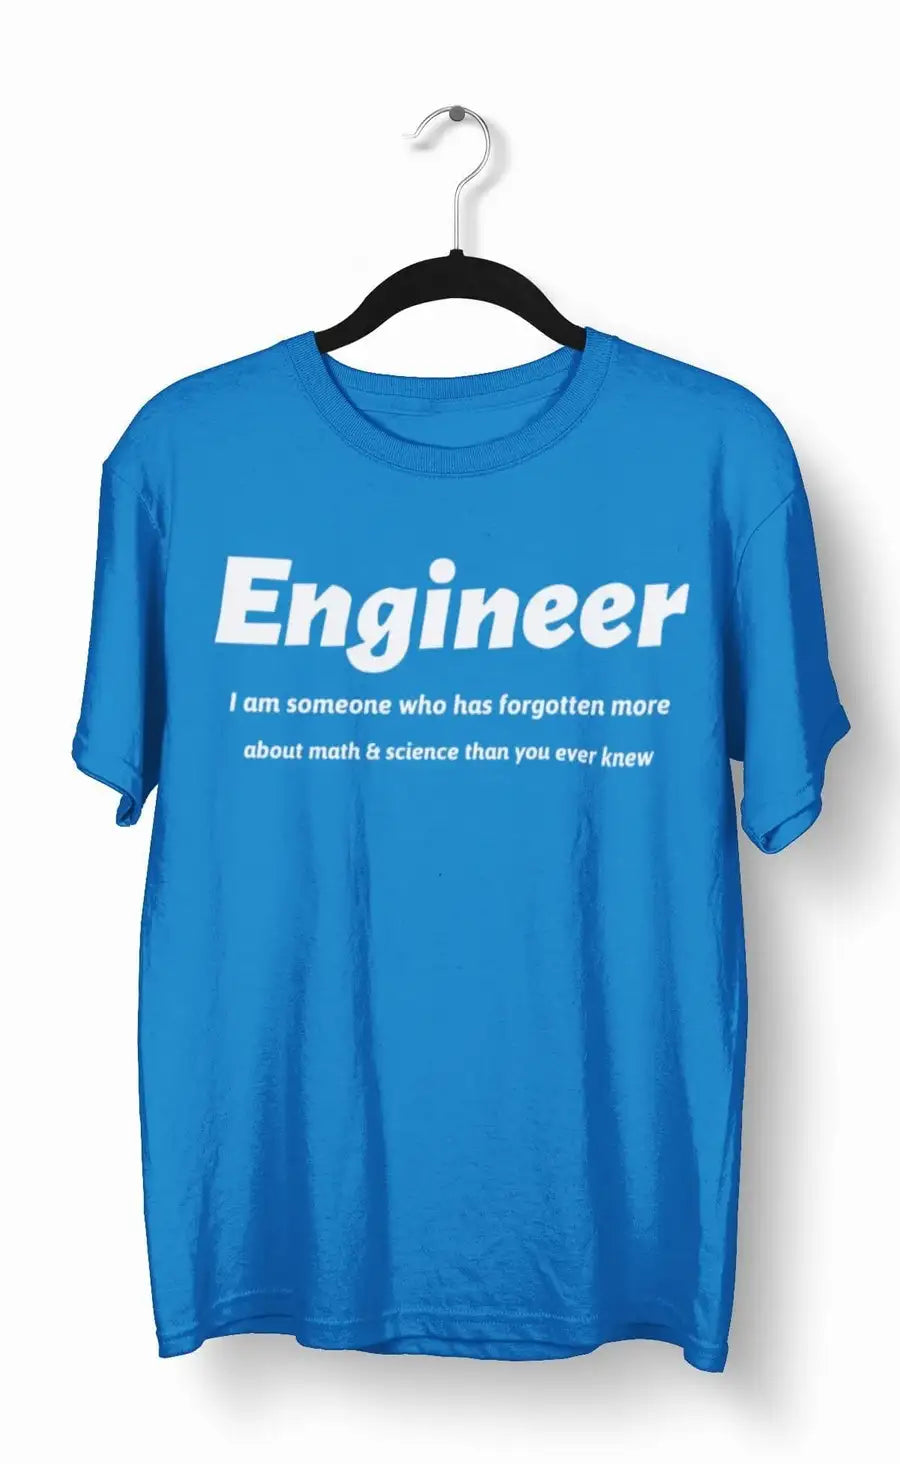 Engineer's "Swag" Limited Edition T-Shirt | Premium Design | Catch My Drift India - Catch My Drift India Clothing clothing, engineer, engineering, fb ad, made in india, shirt, t shirt, tshirt